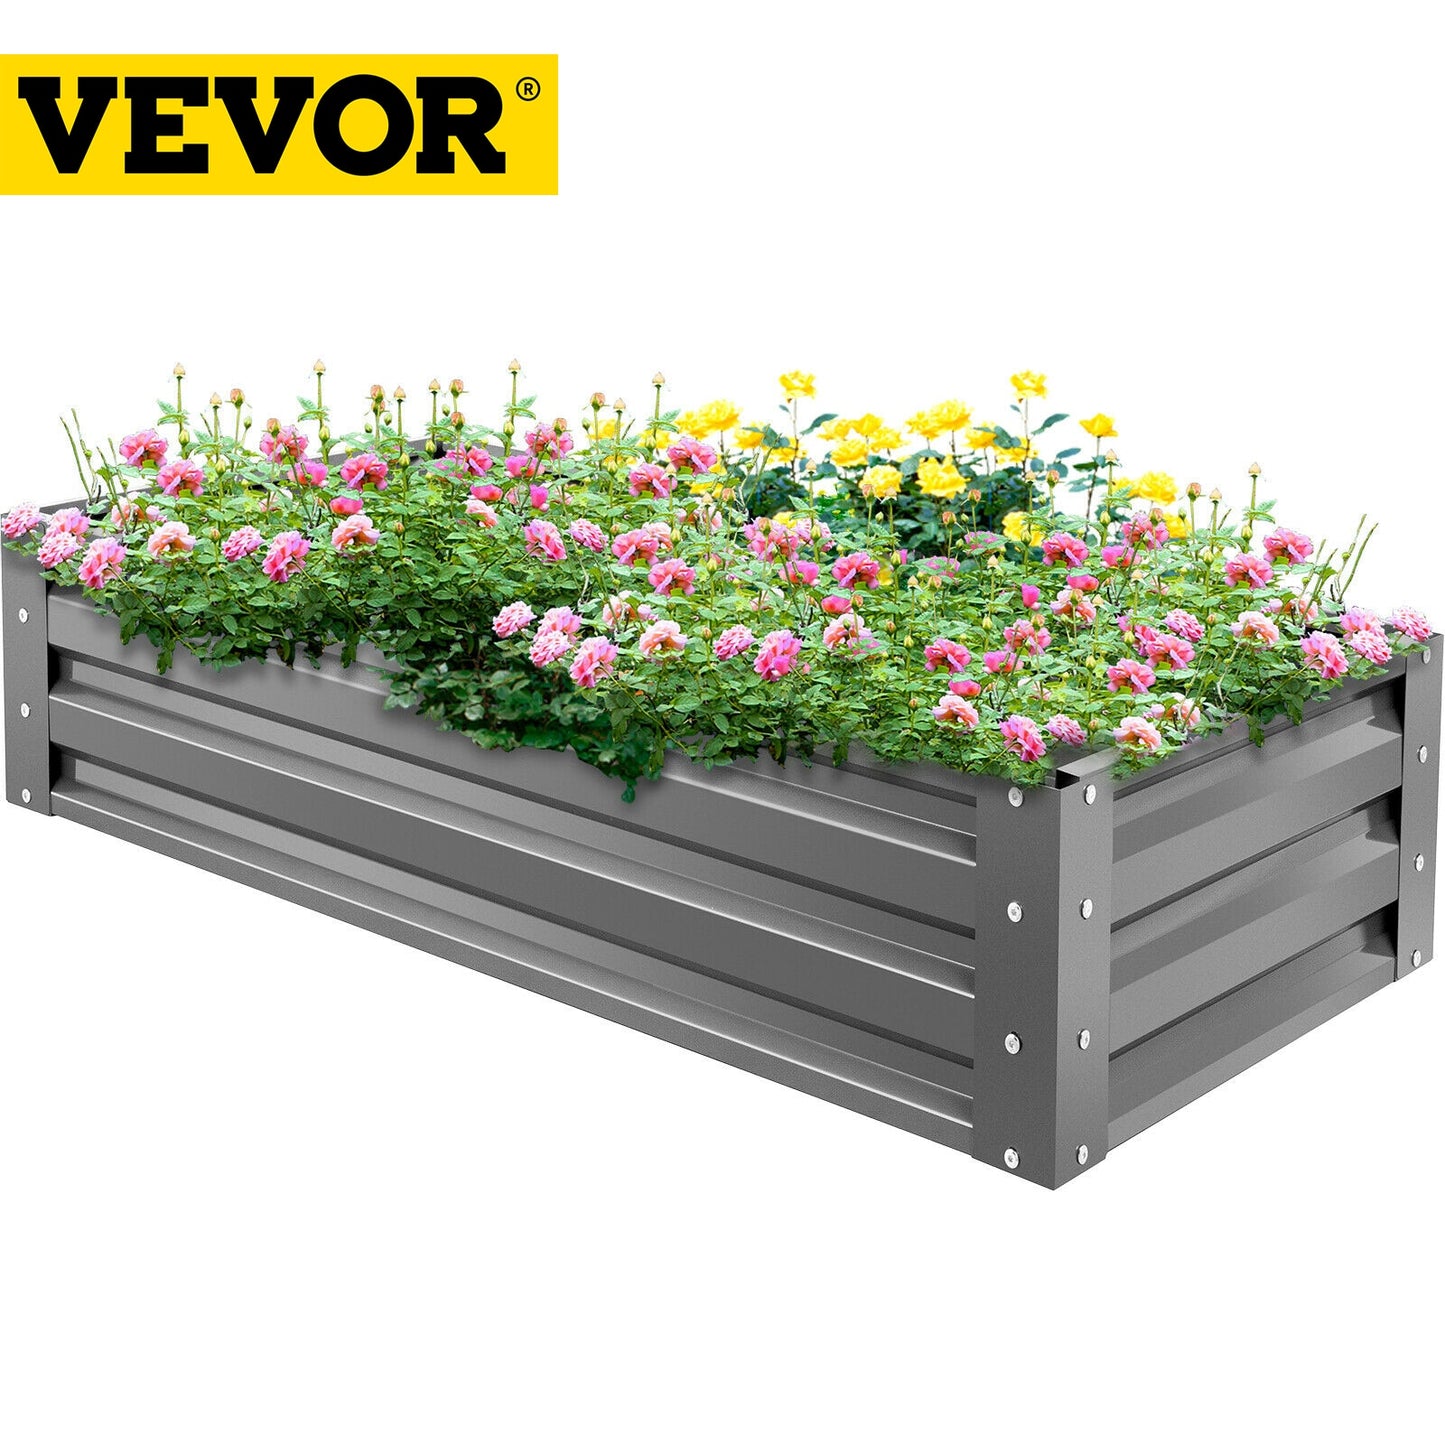 VEVOR Galvanized Raised Garden Bed, 48&quot; x 24&quot; x 10&quot; Metal Planter Box, for Growing Vegetables, Flowers, Fruits and Succulents